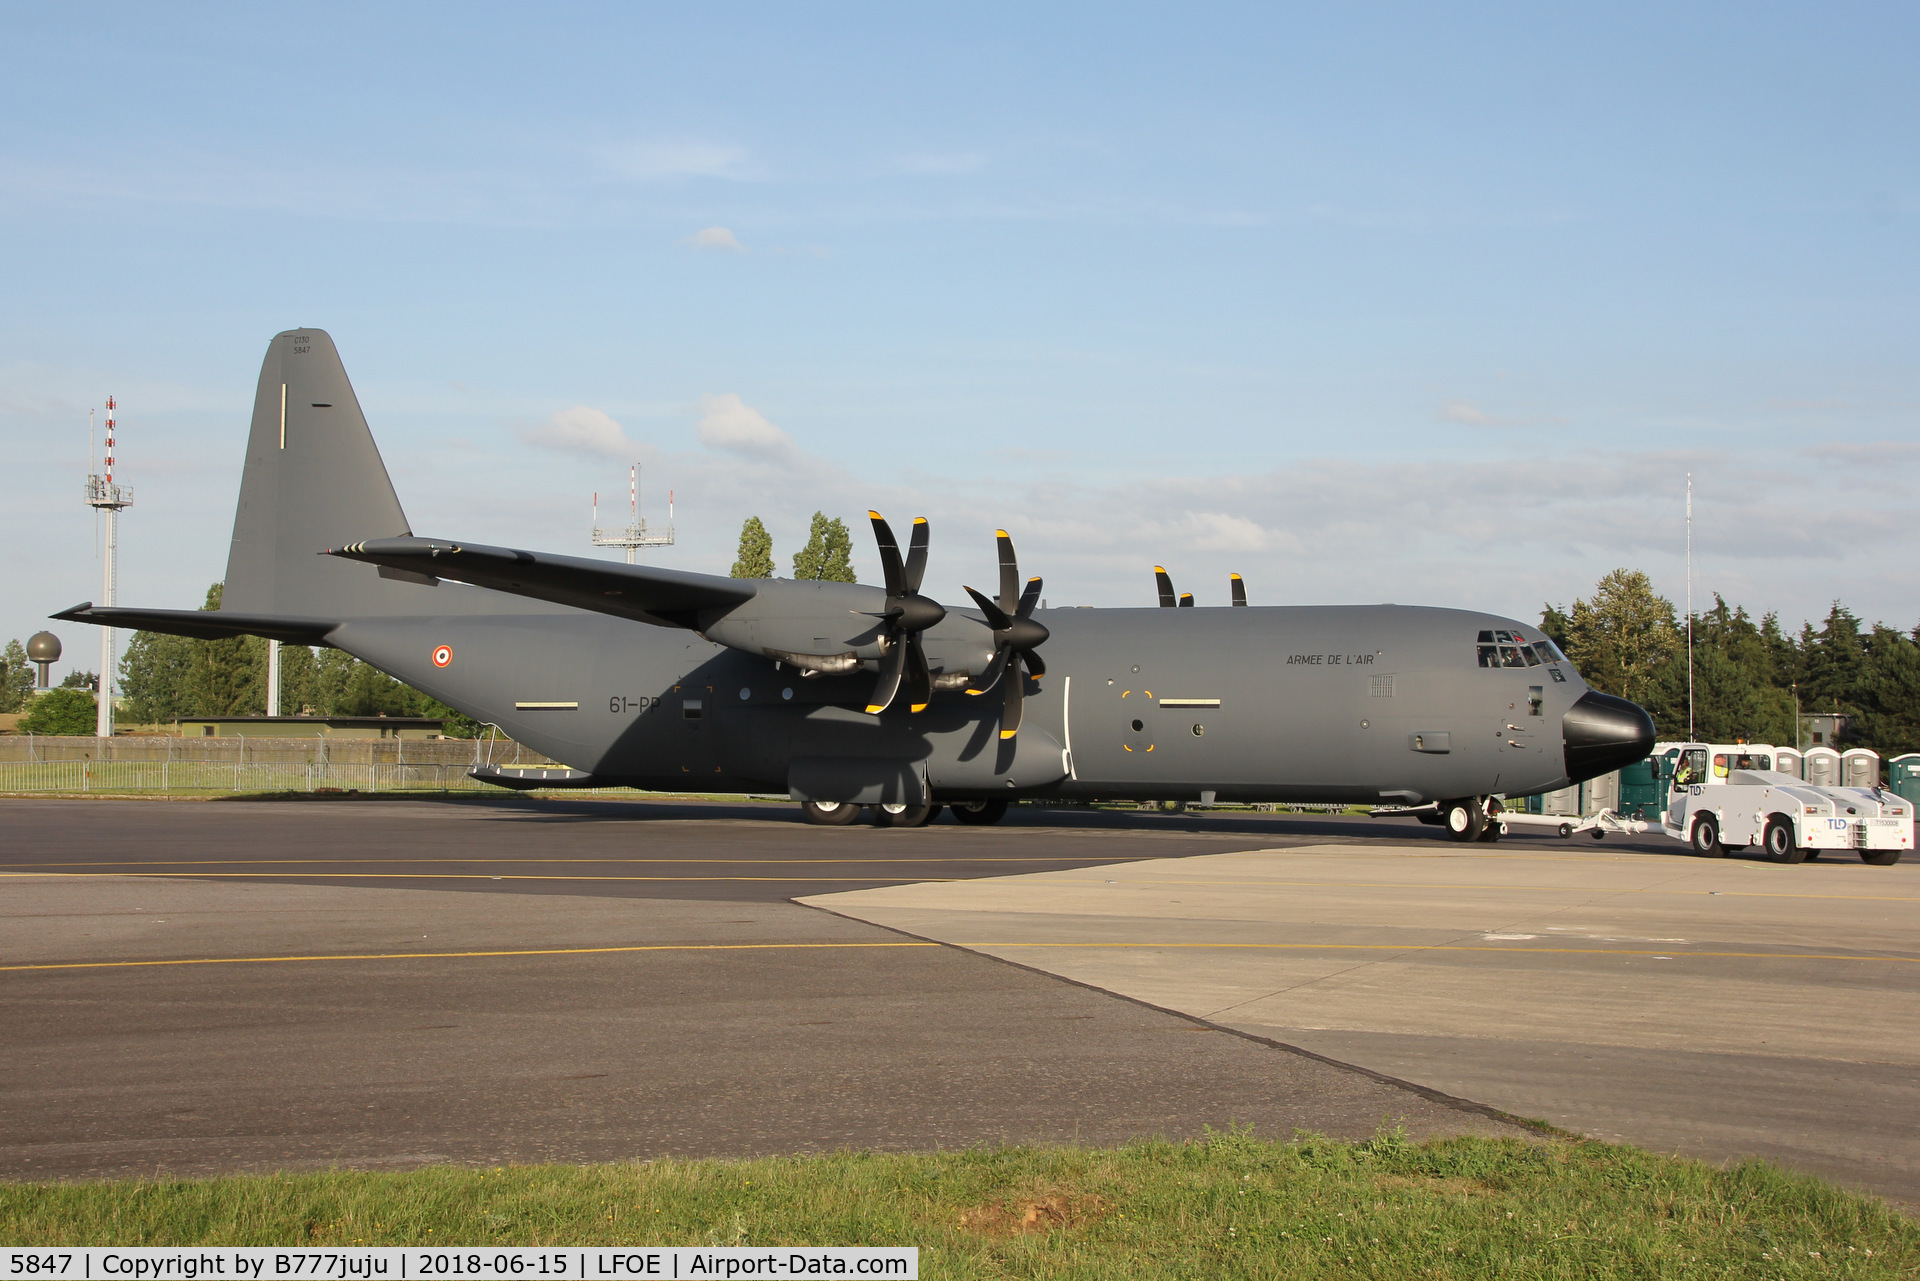 5847, 2018 Lockheed Martin C-130J-30 Hercules C/N 382-5847, at Evreux